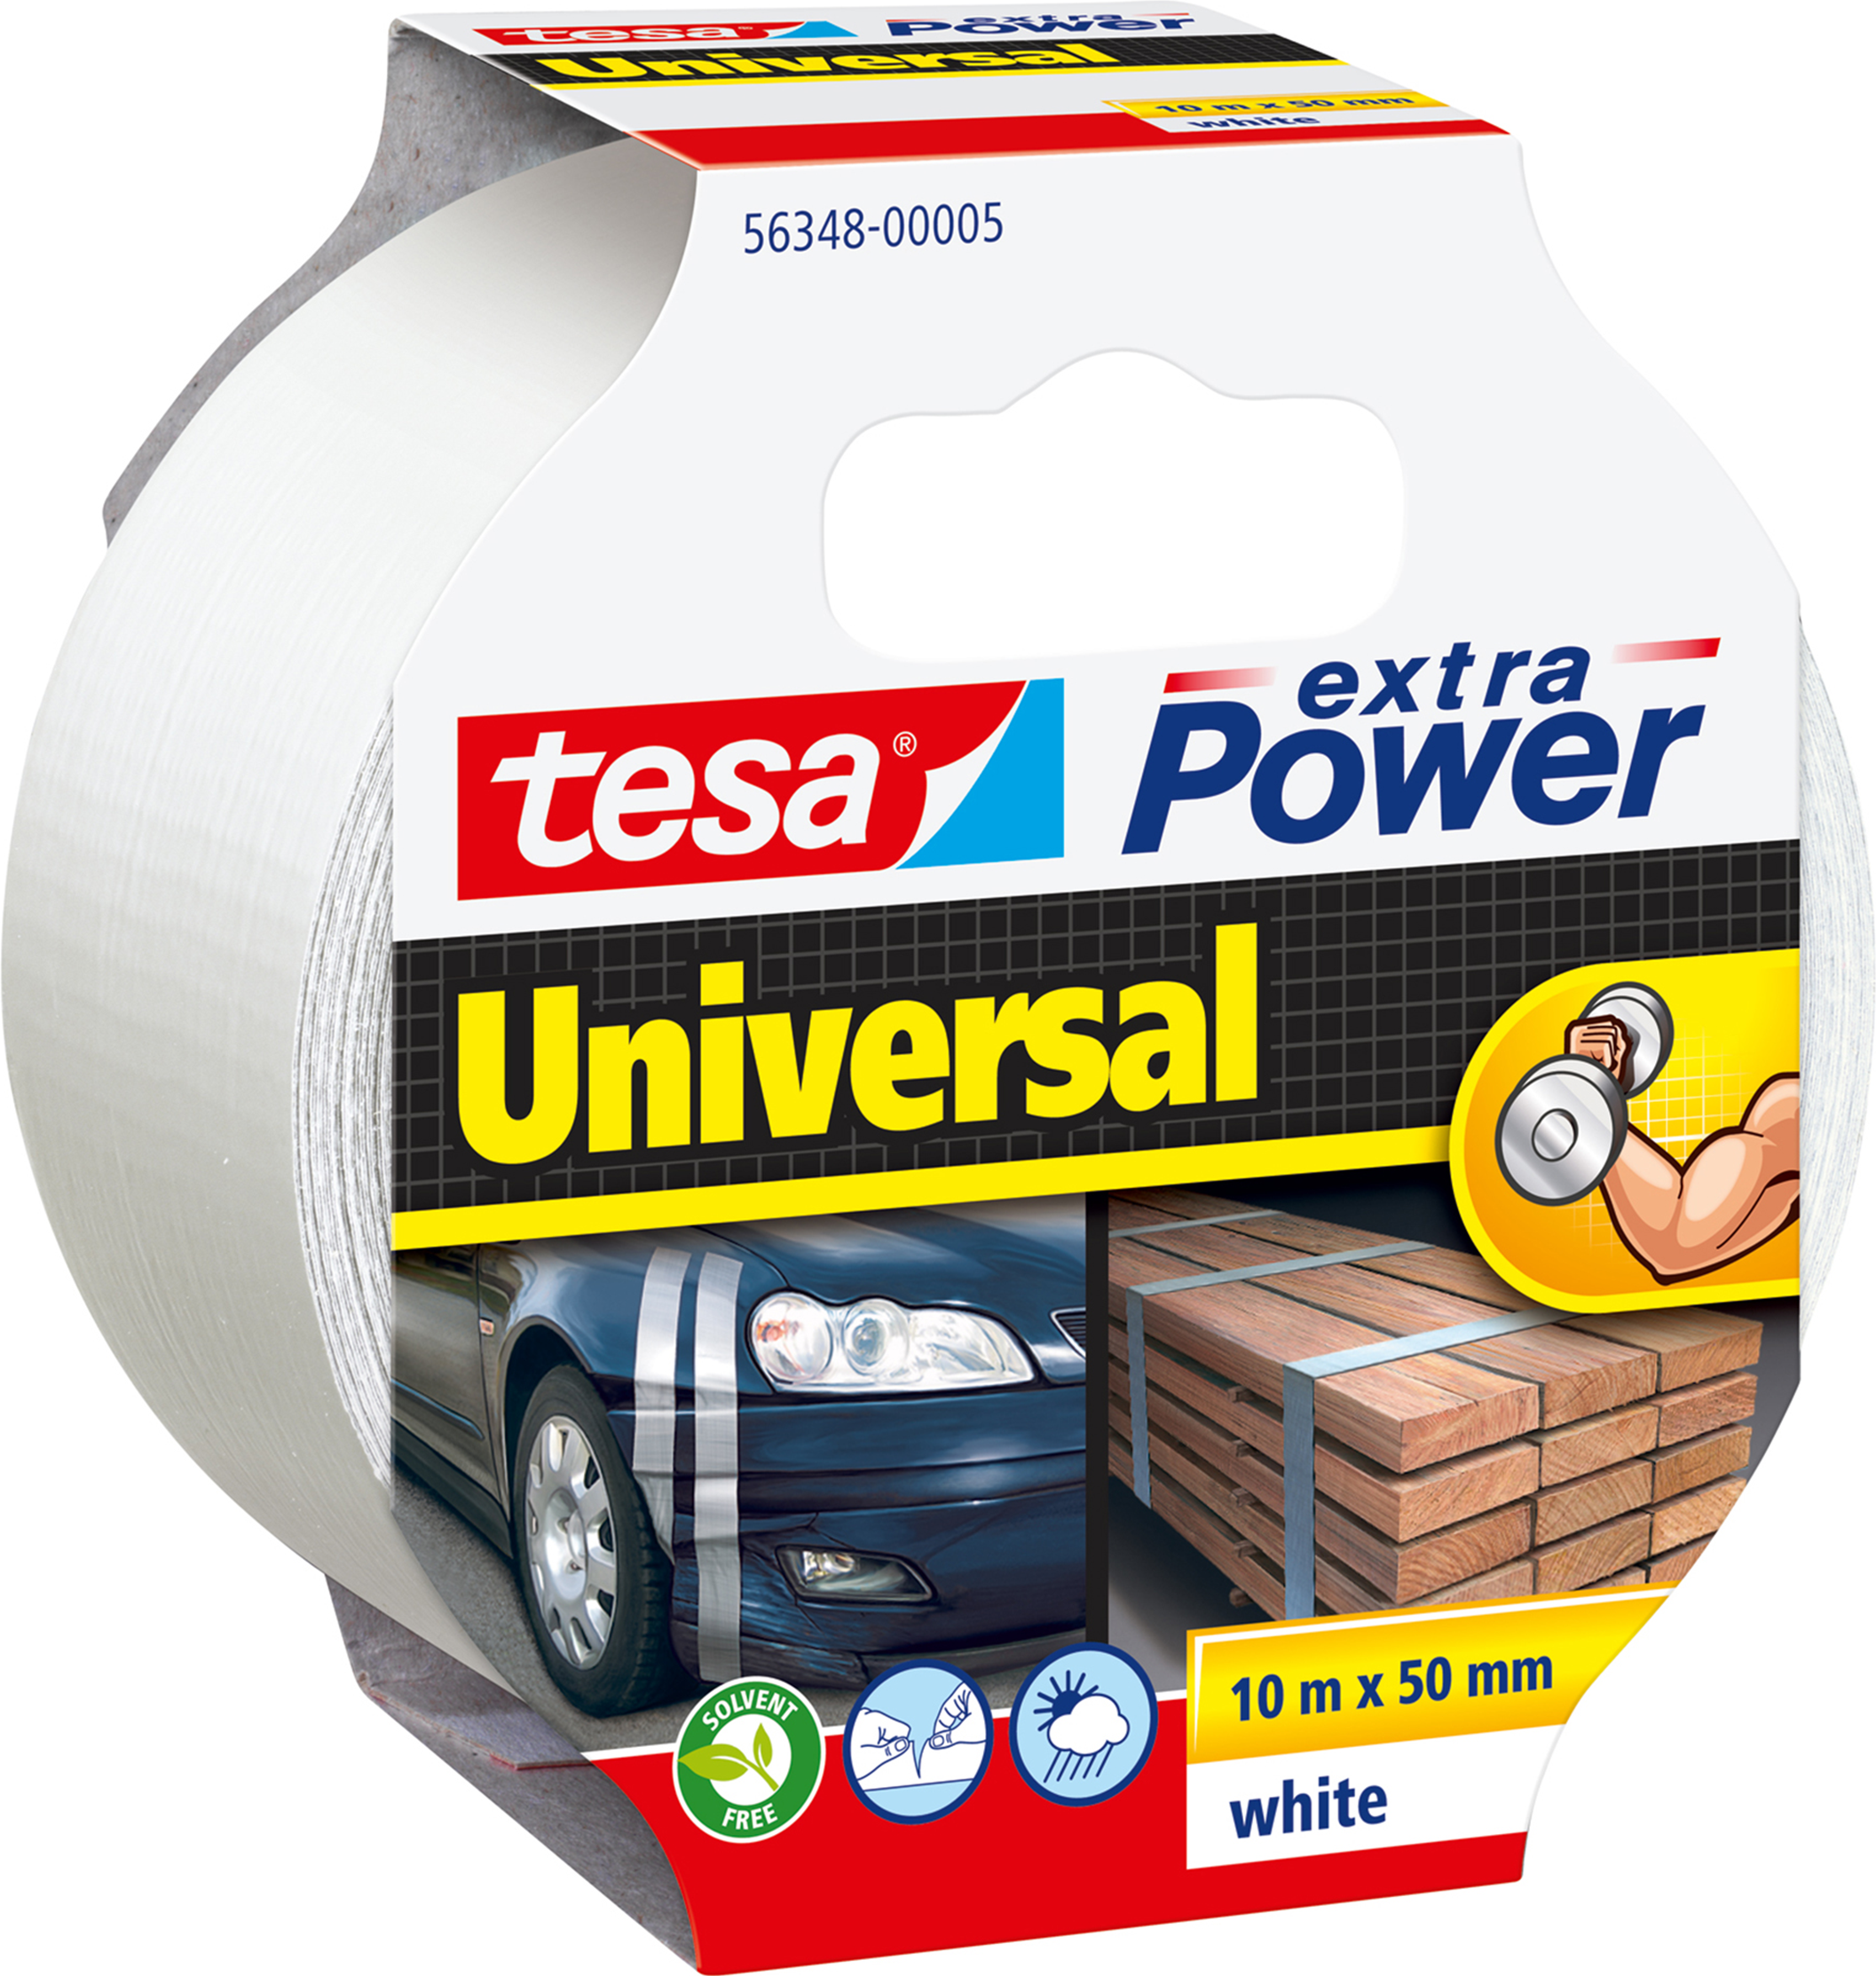 TESA extra Power Universal (56348-00005-05)